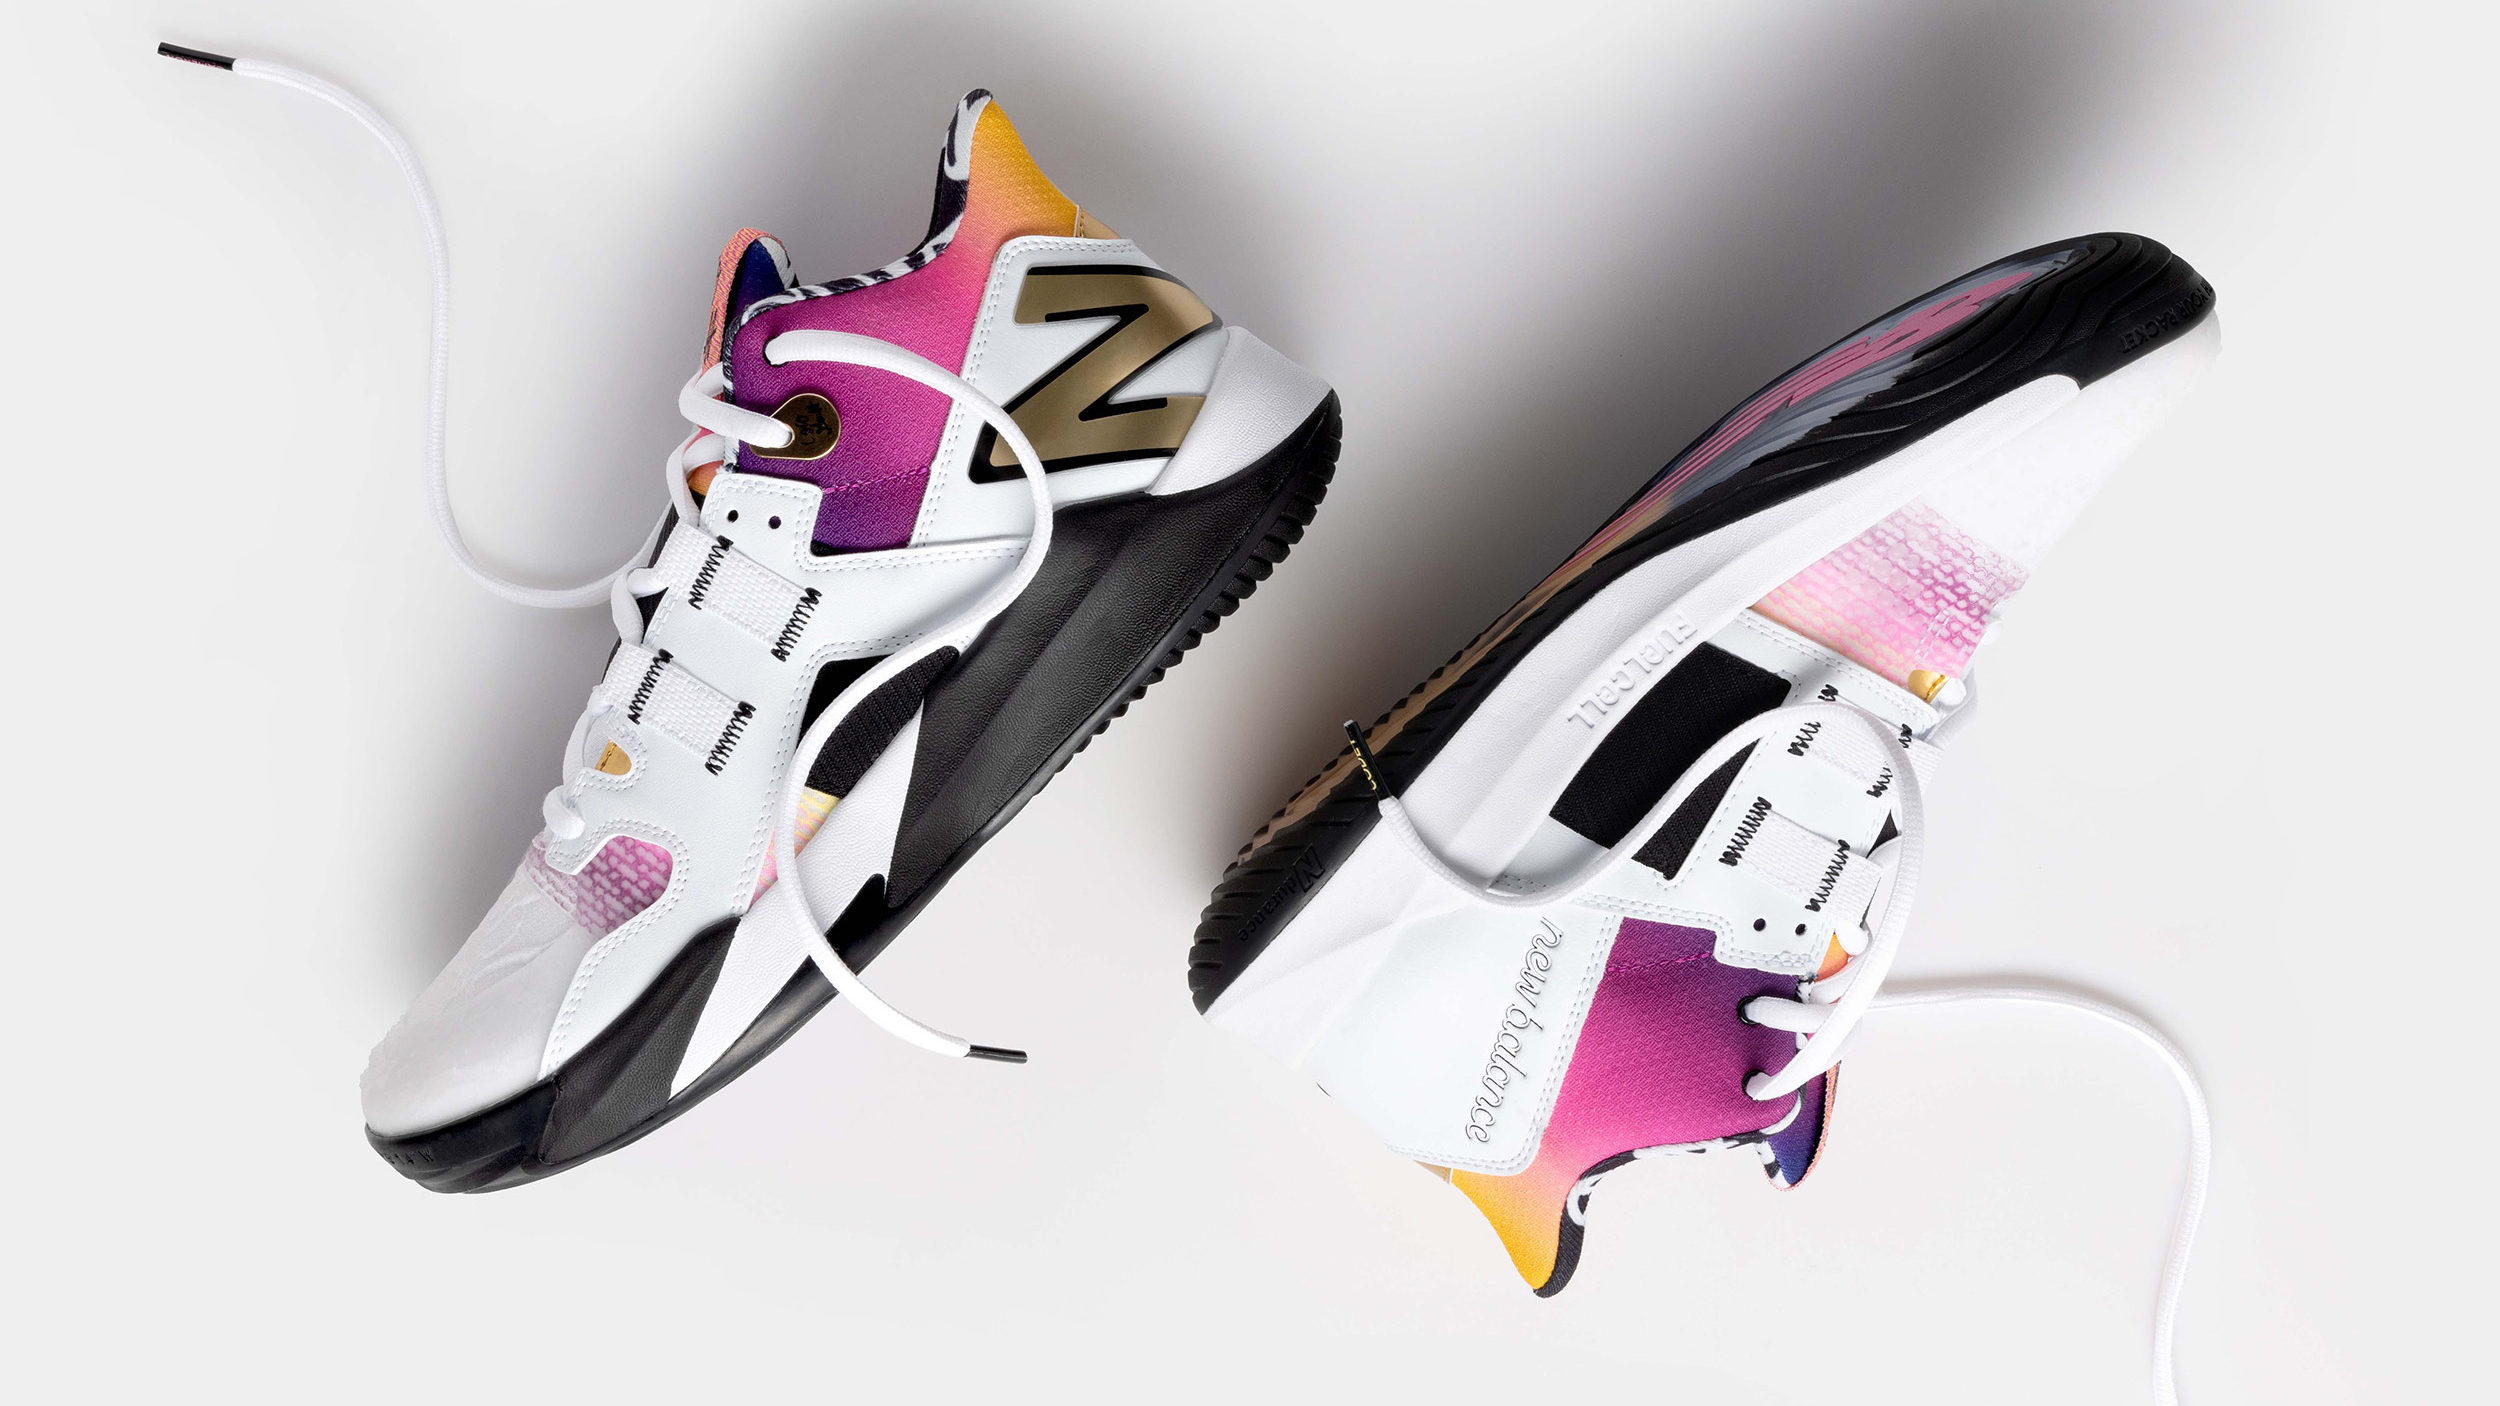 Coco Gauff Debuts New Balance Signature Shoe